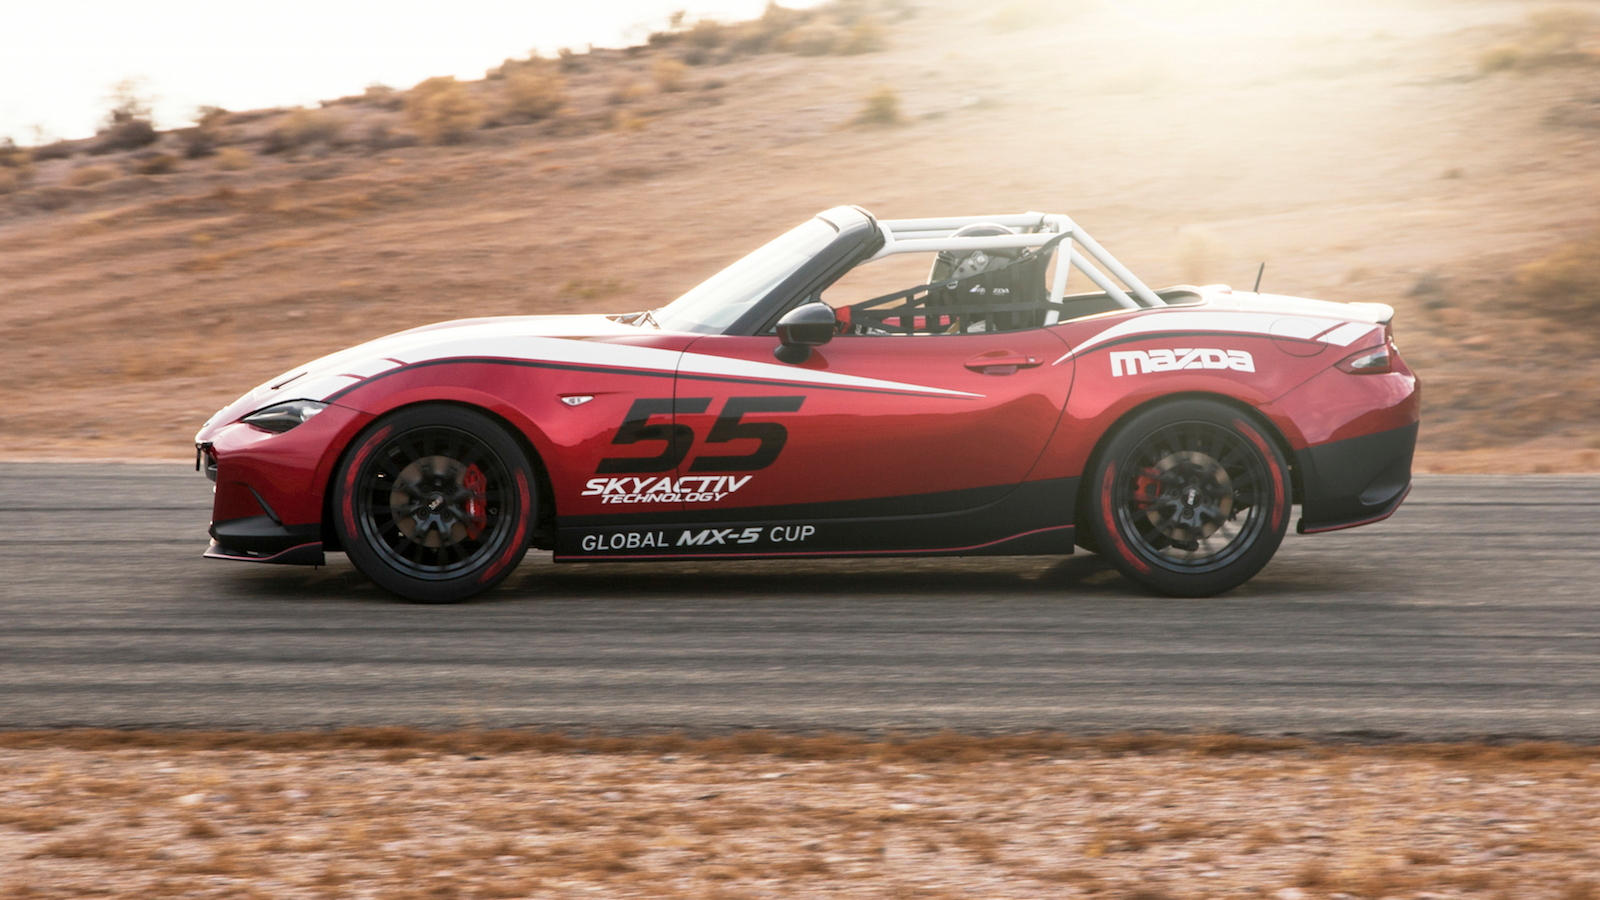 2016 Mazda Global MX-5 Cup race car